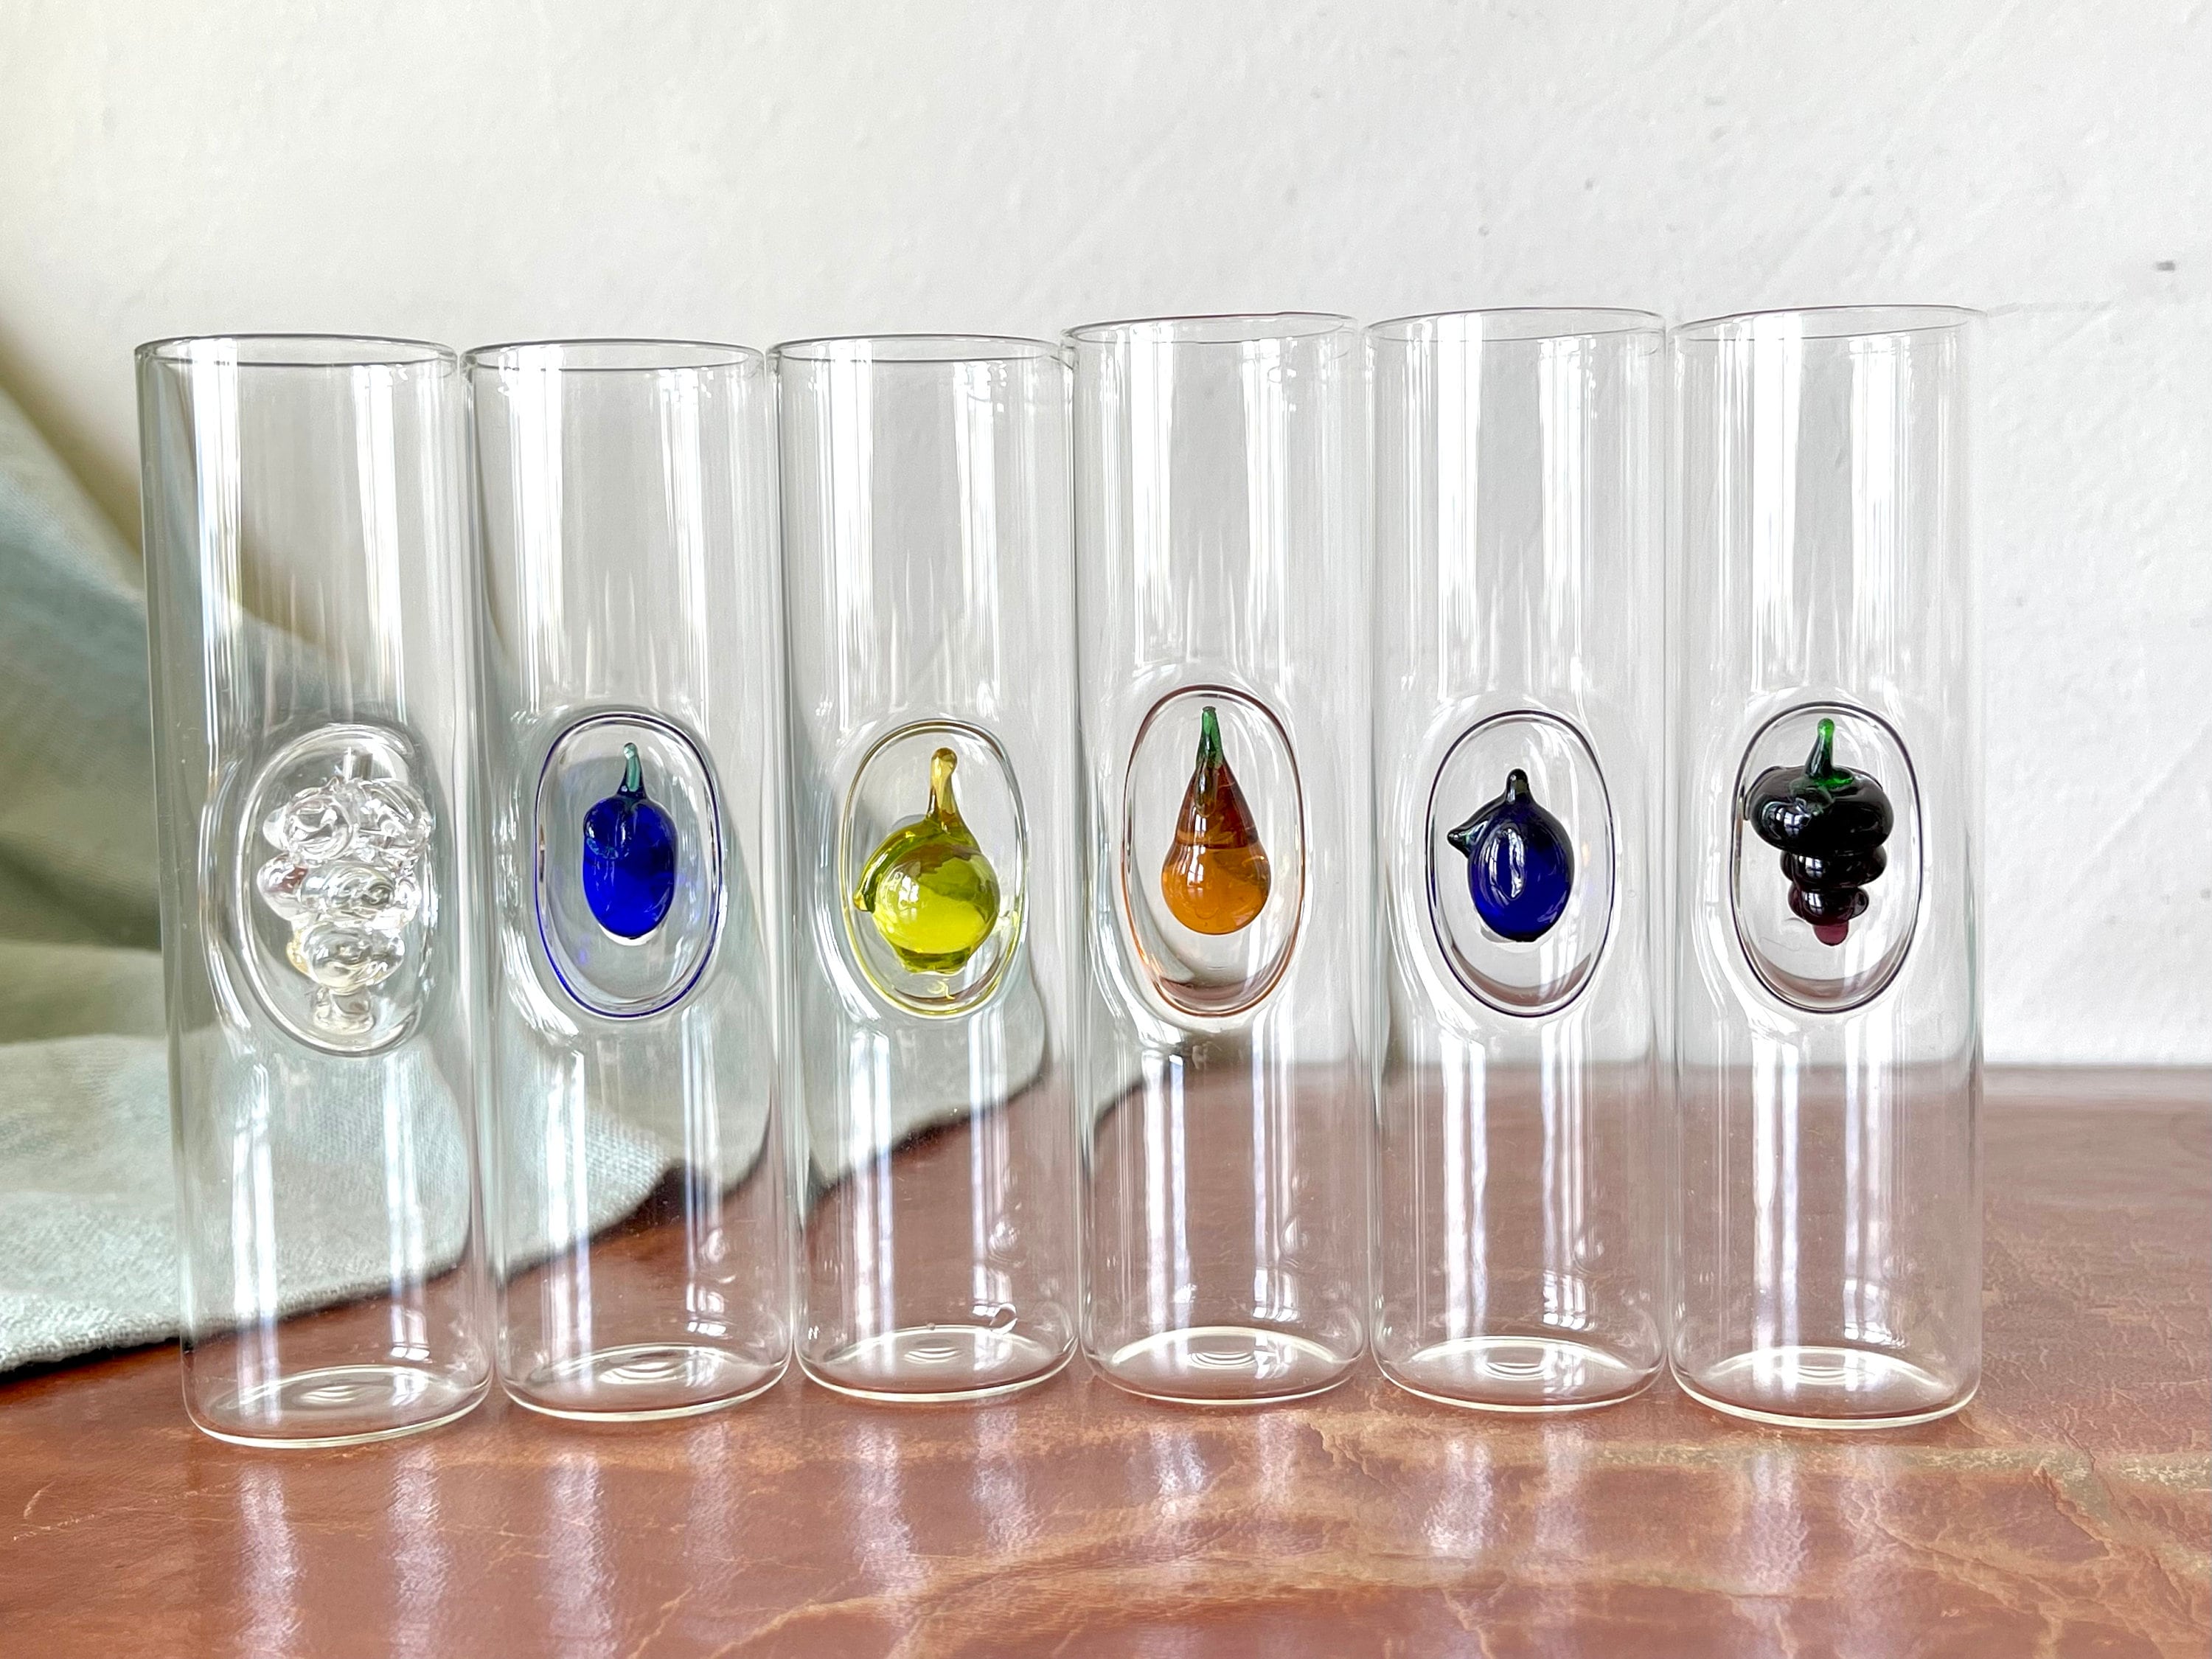 Ricco Deruta ceramic limoncello shot glasses - set of 2 – Bellezza Home